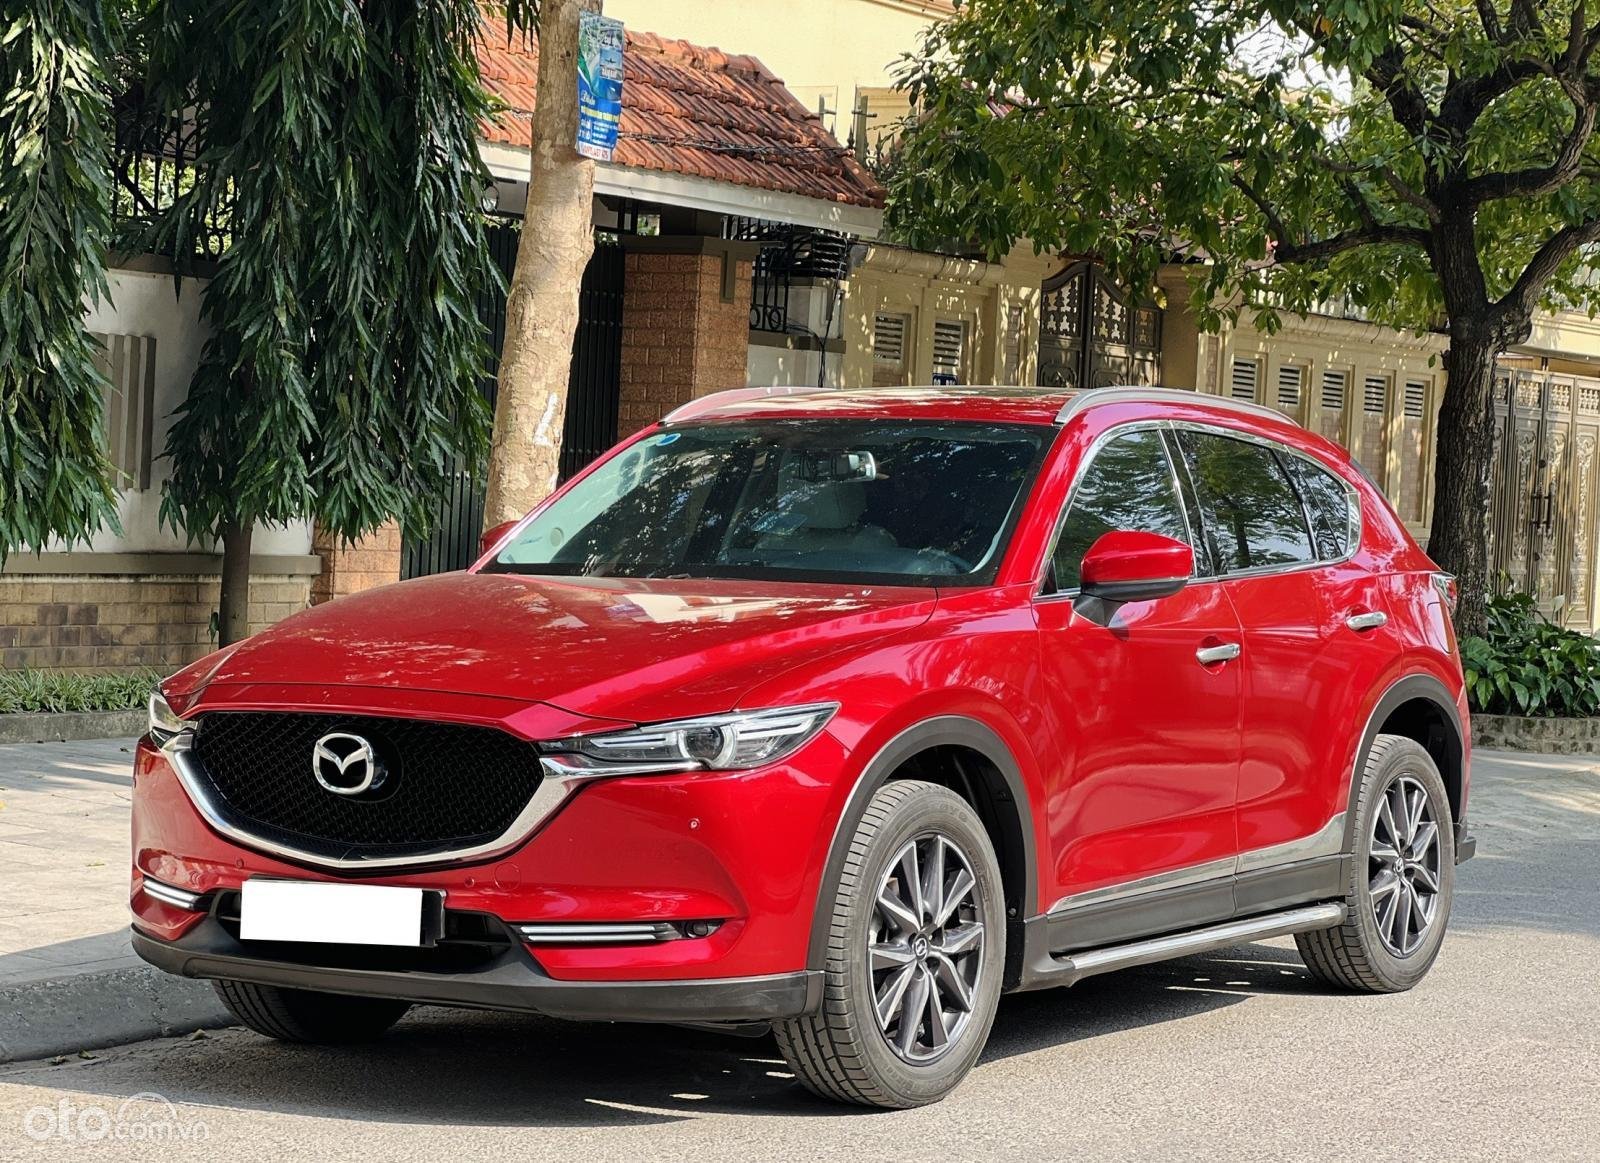 Tổng quan xe Mazda CX-5 2019.